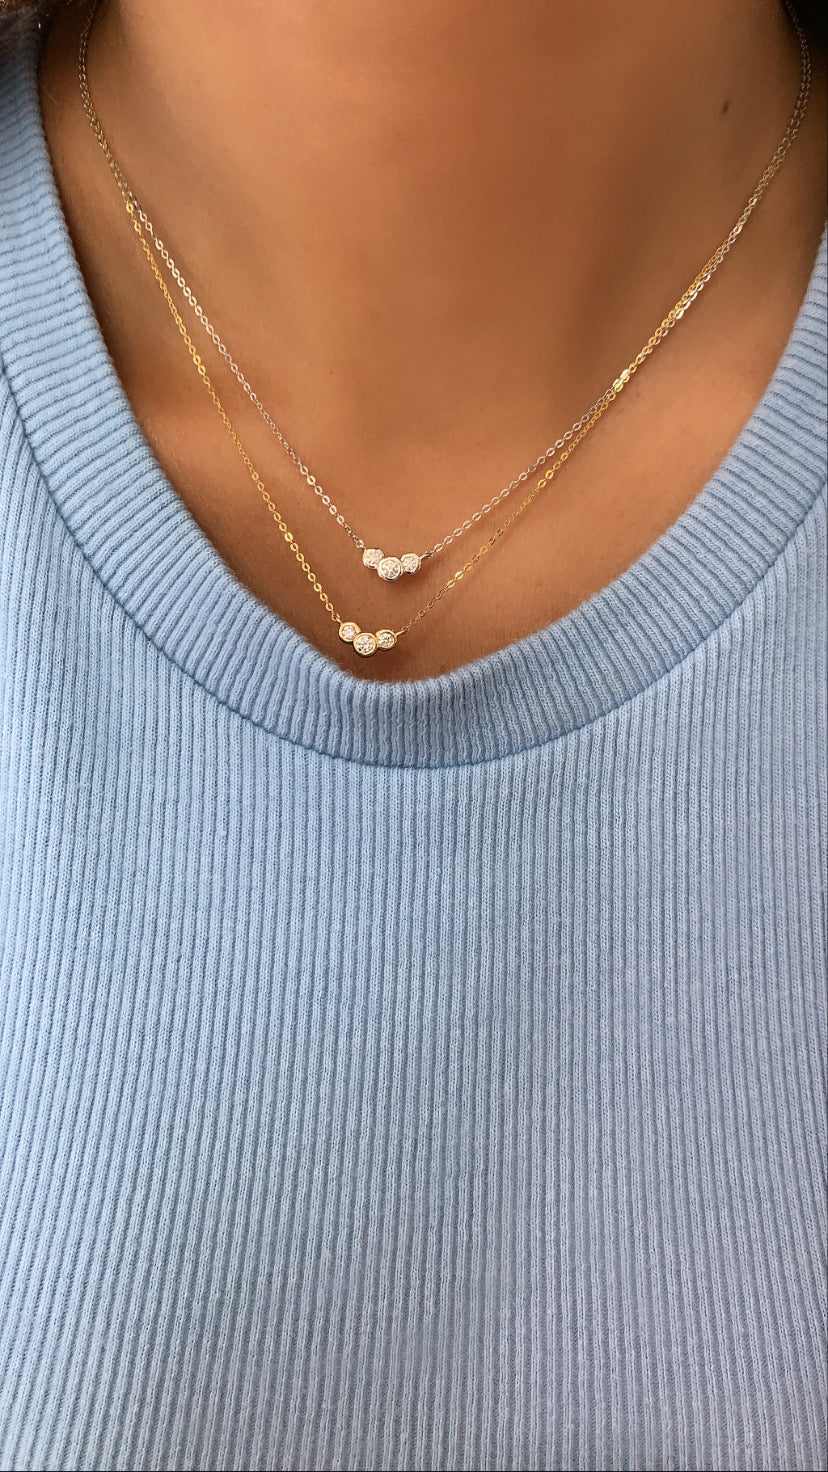 Mini Graduated Bezel Set Diamond Necklace